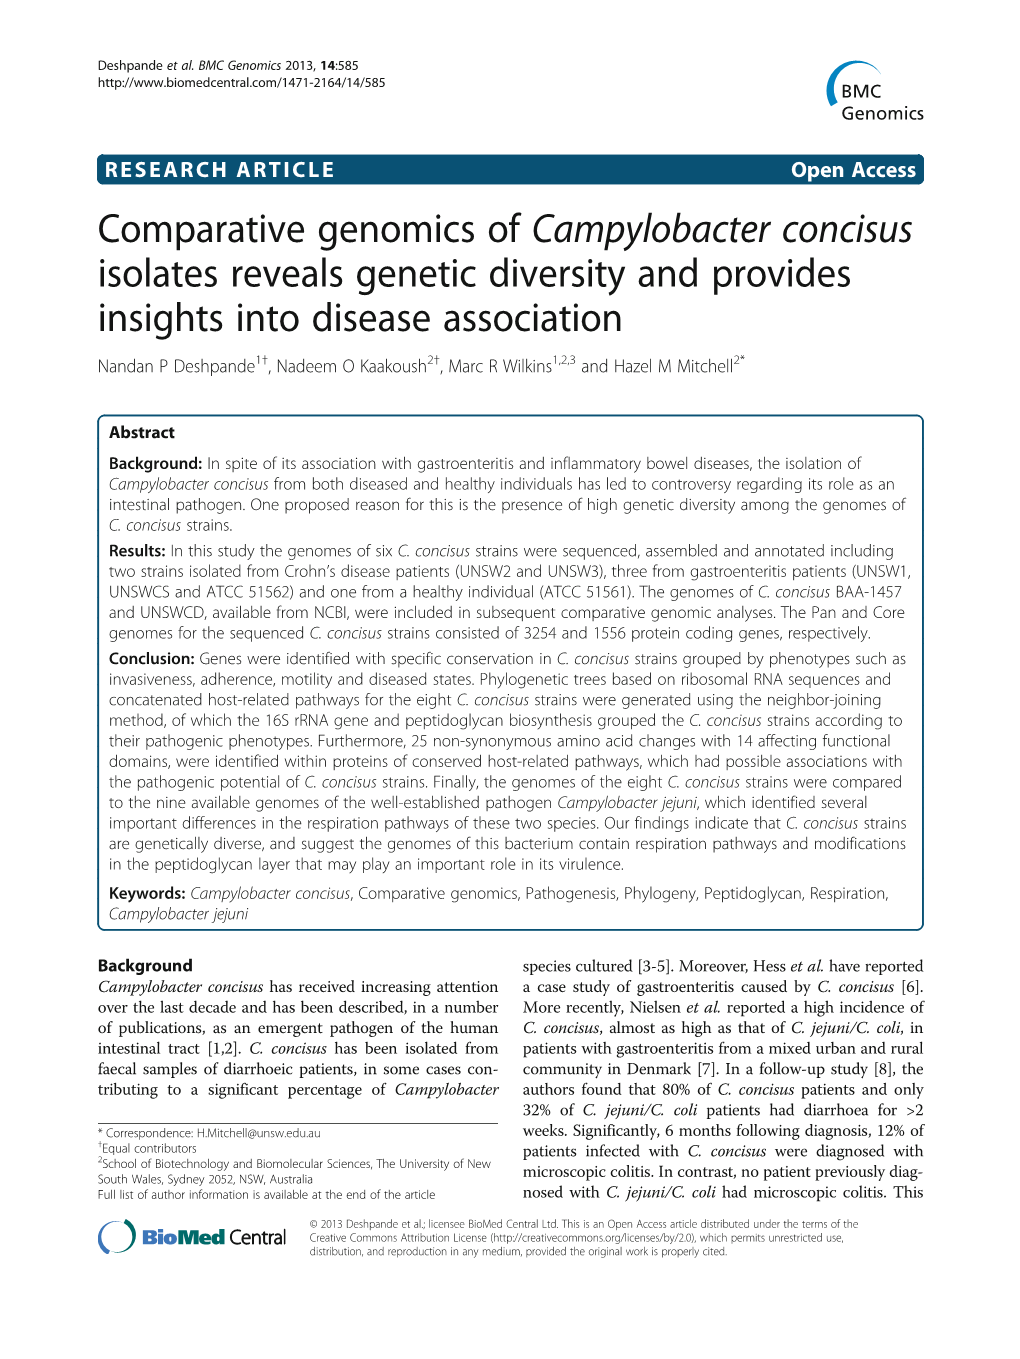 Comparative Genomics of Campylobacter Concisus Isolates